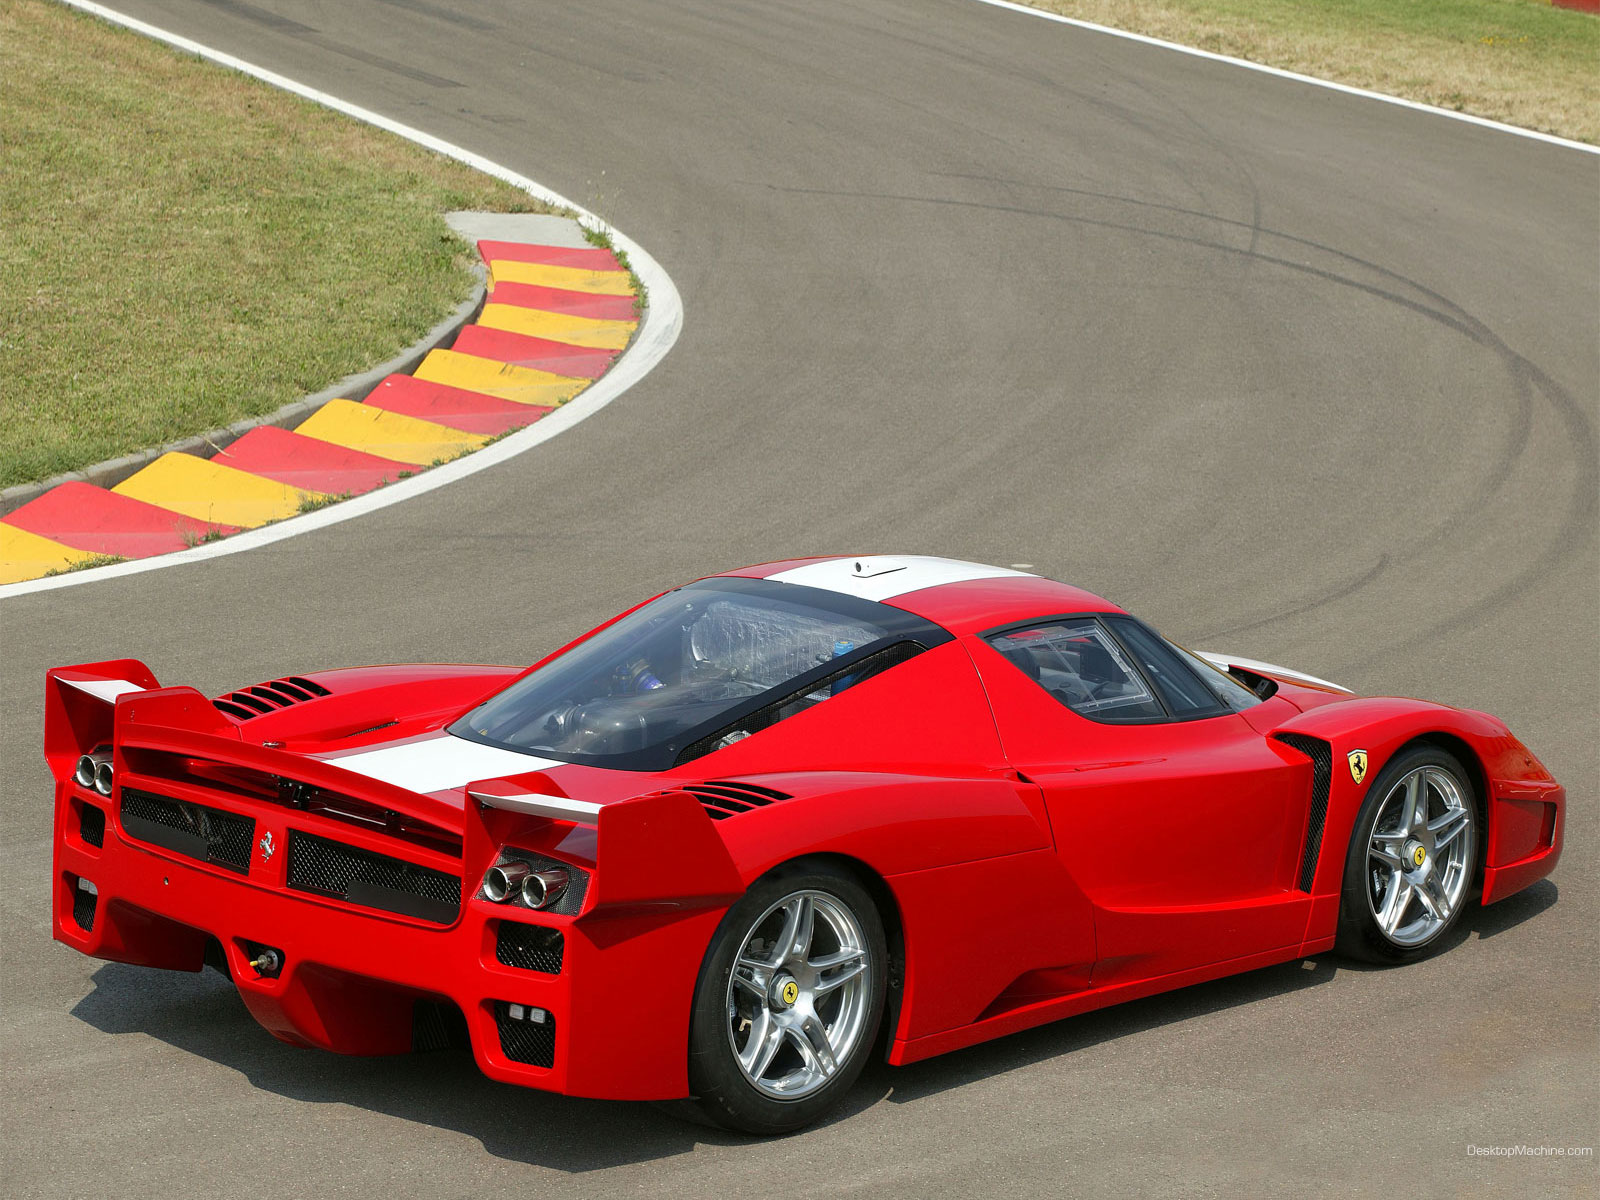 Télécharger des fonds d'écran Ferrari Fxx HD